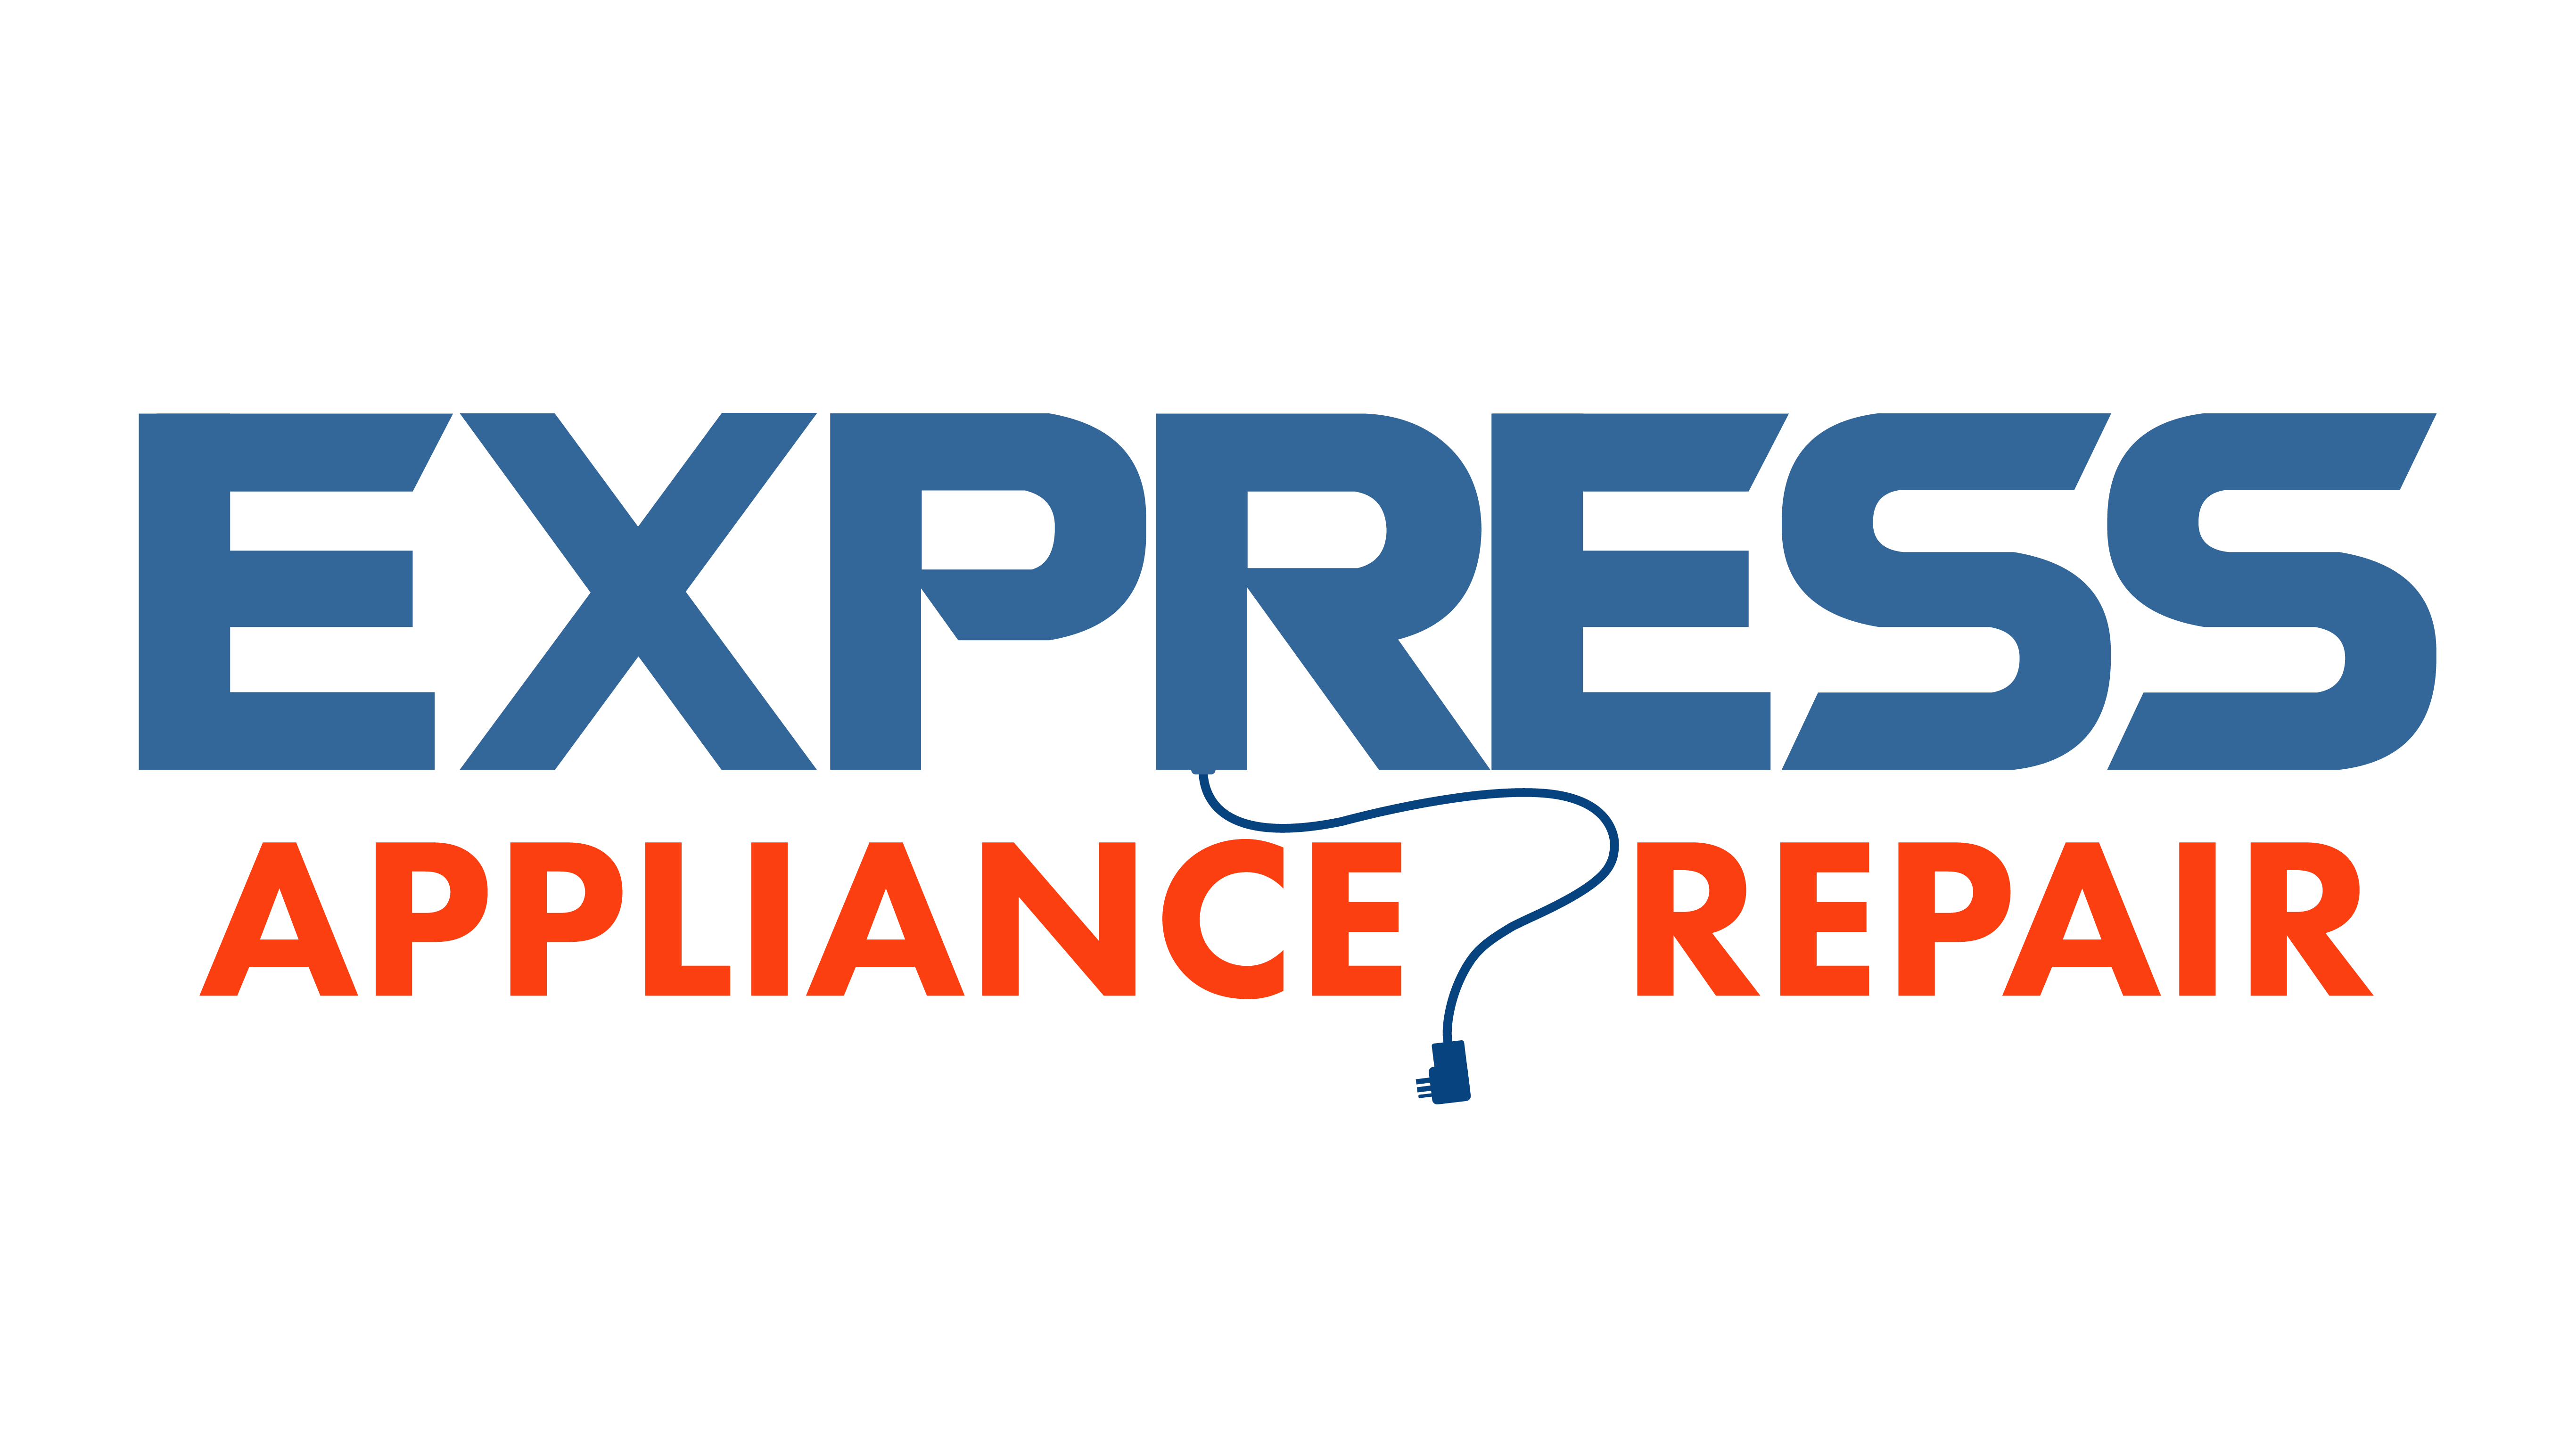 Express Appliance Repair's logo